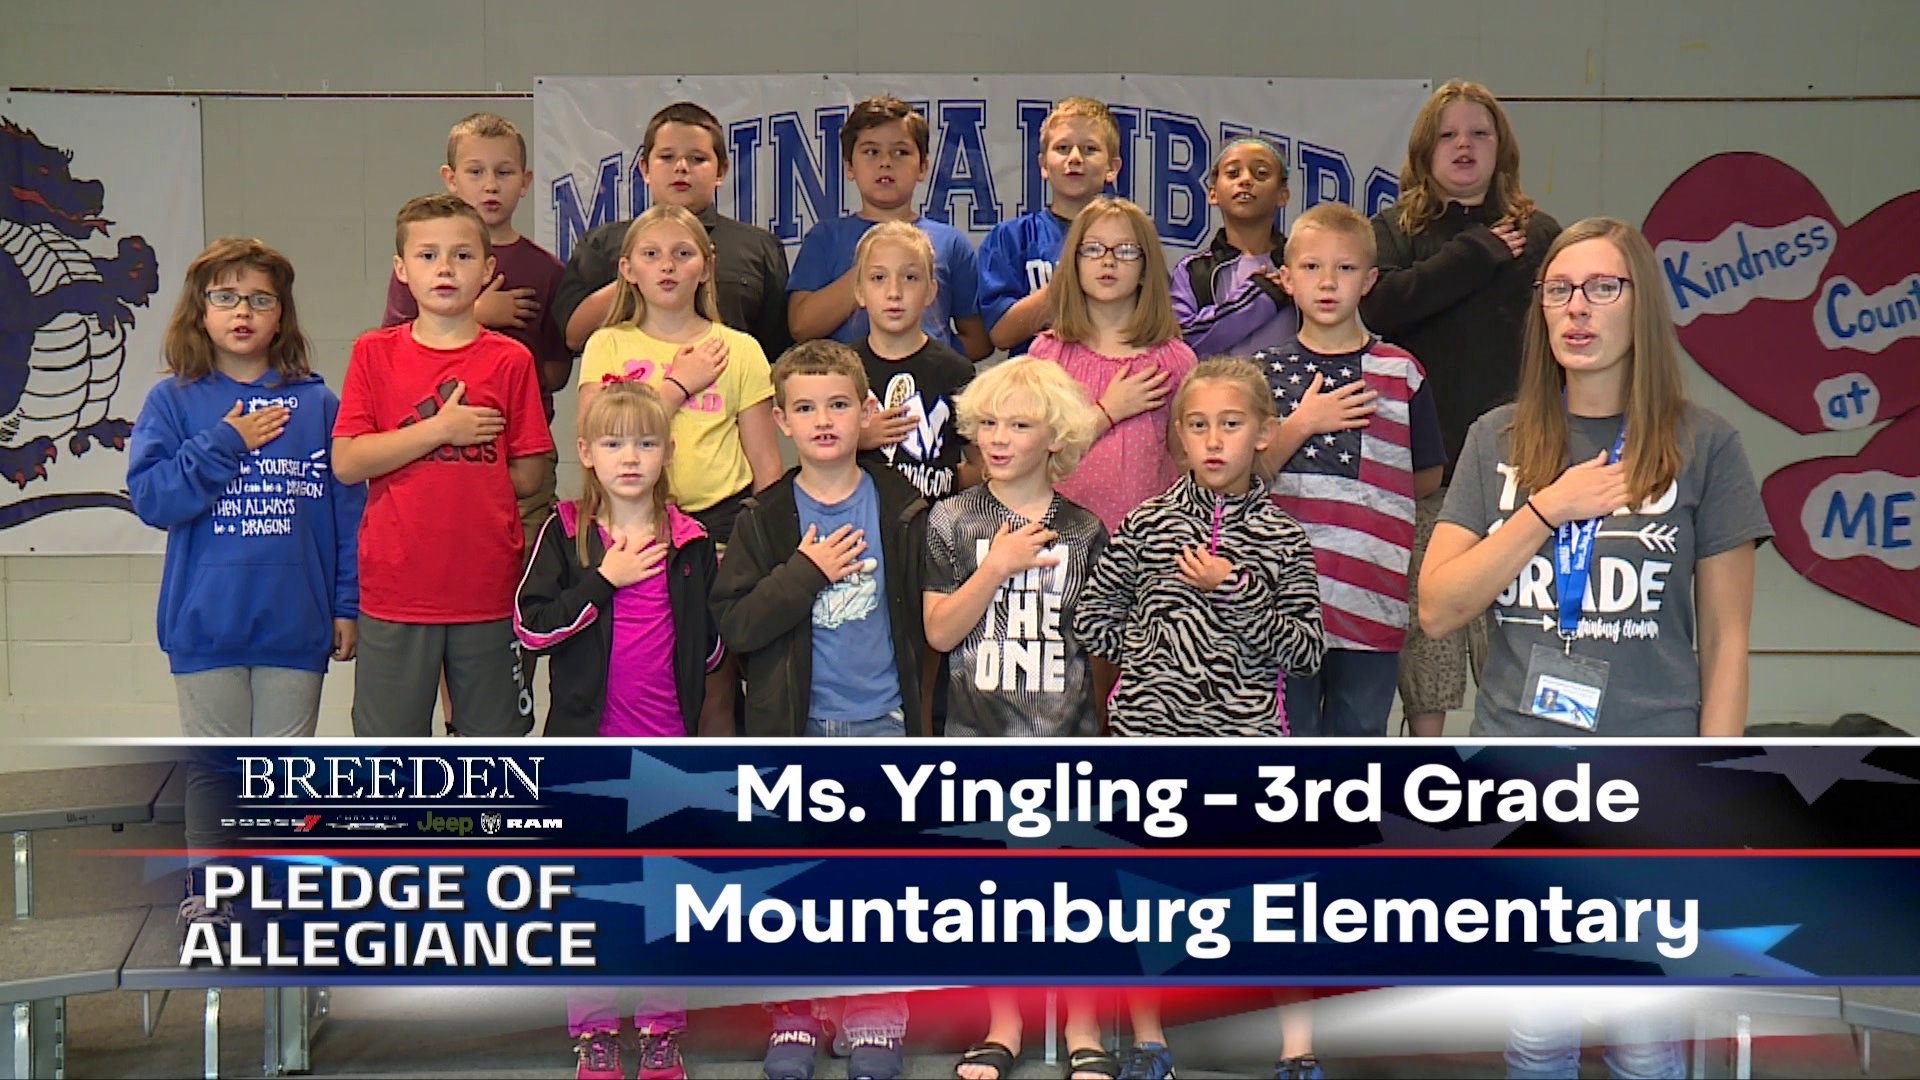 Mrs. Yingling 3rd Grade, Mountainburg Elementary